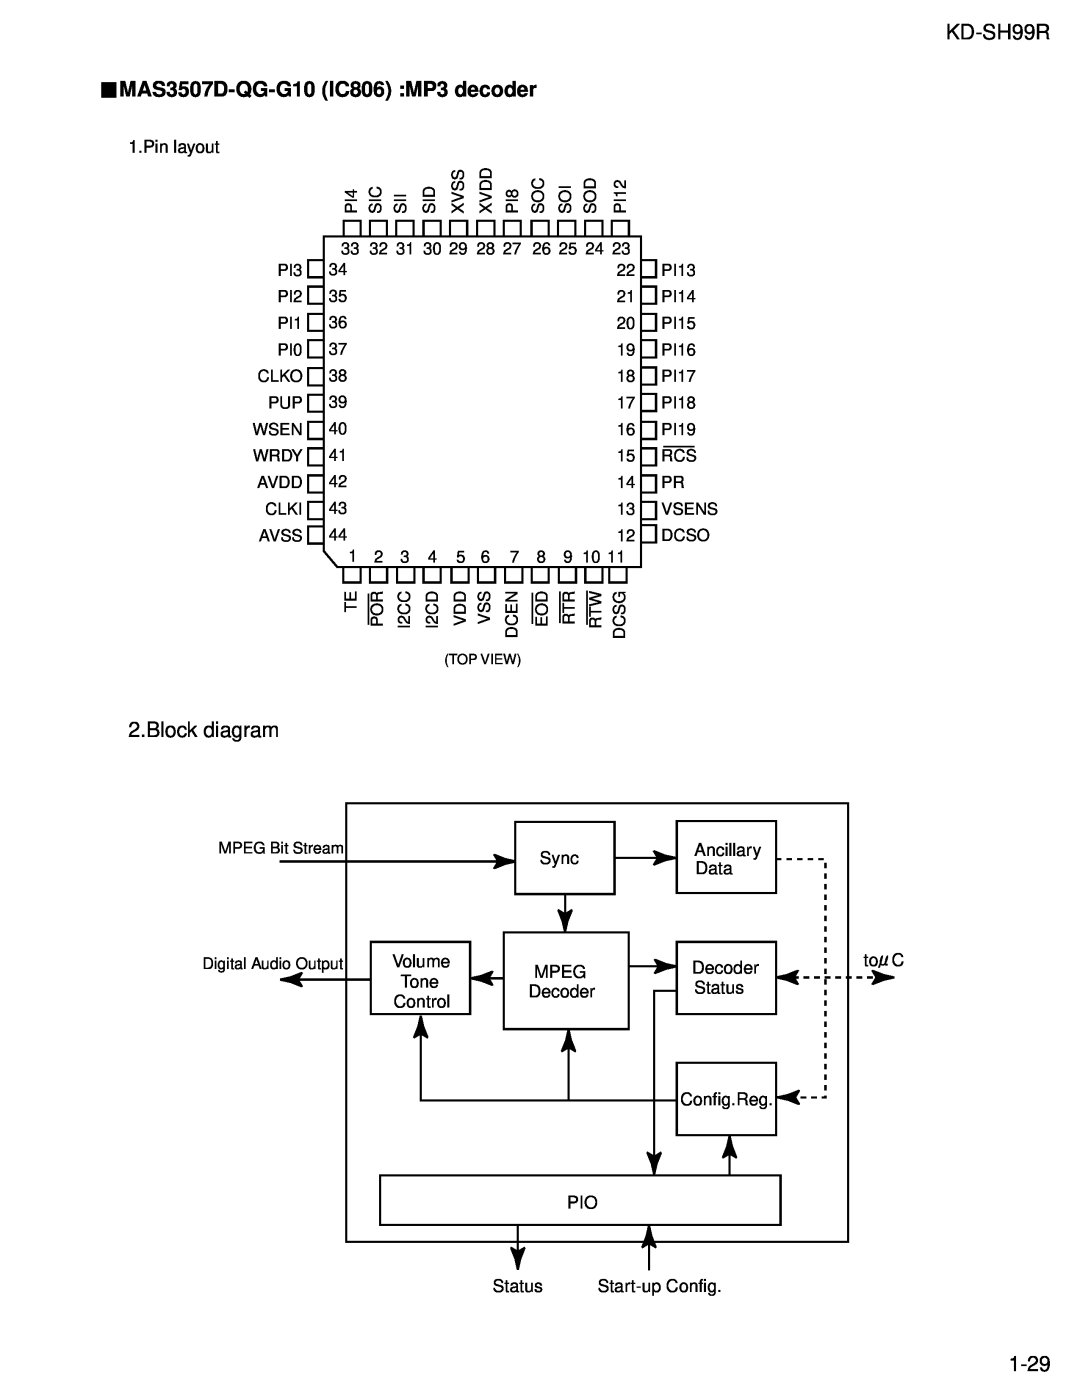 JVC KD-SH99R service manual MAS3507D-QG-G10IC806 MP3 decoder, Block diagram, 1-29 